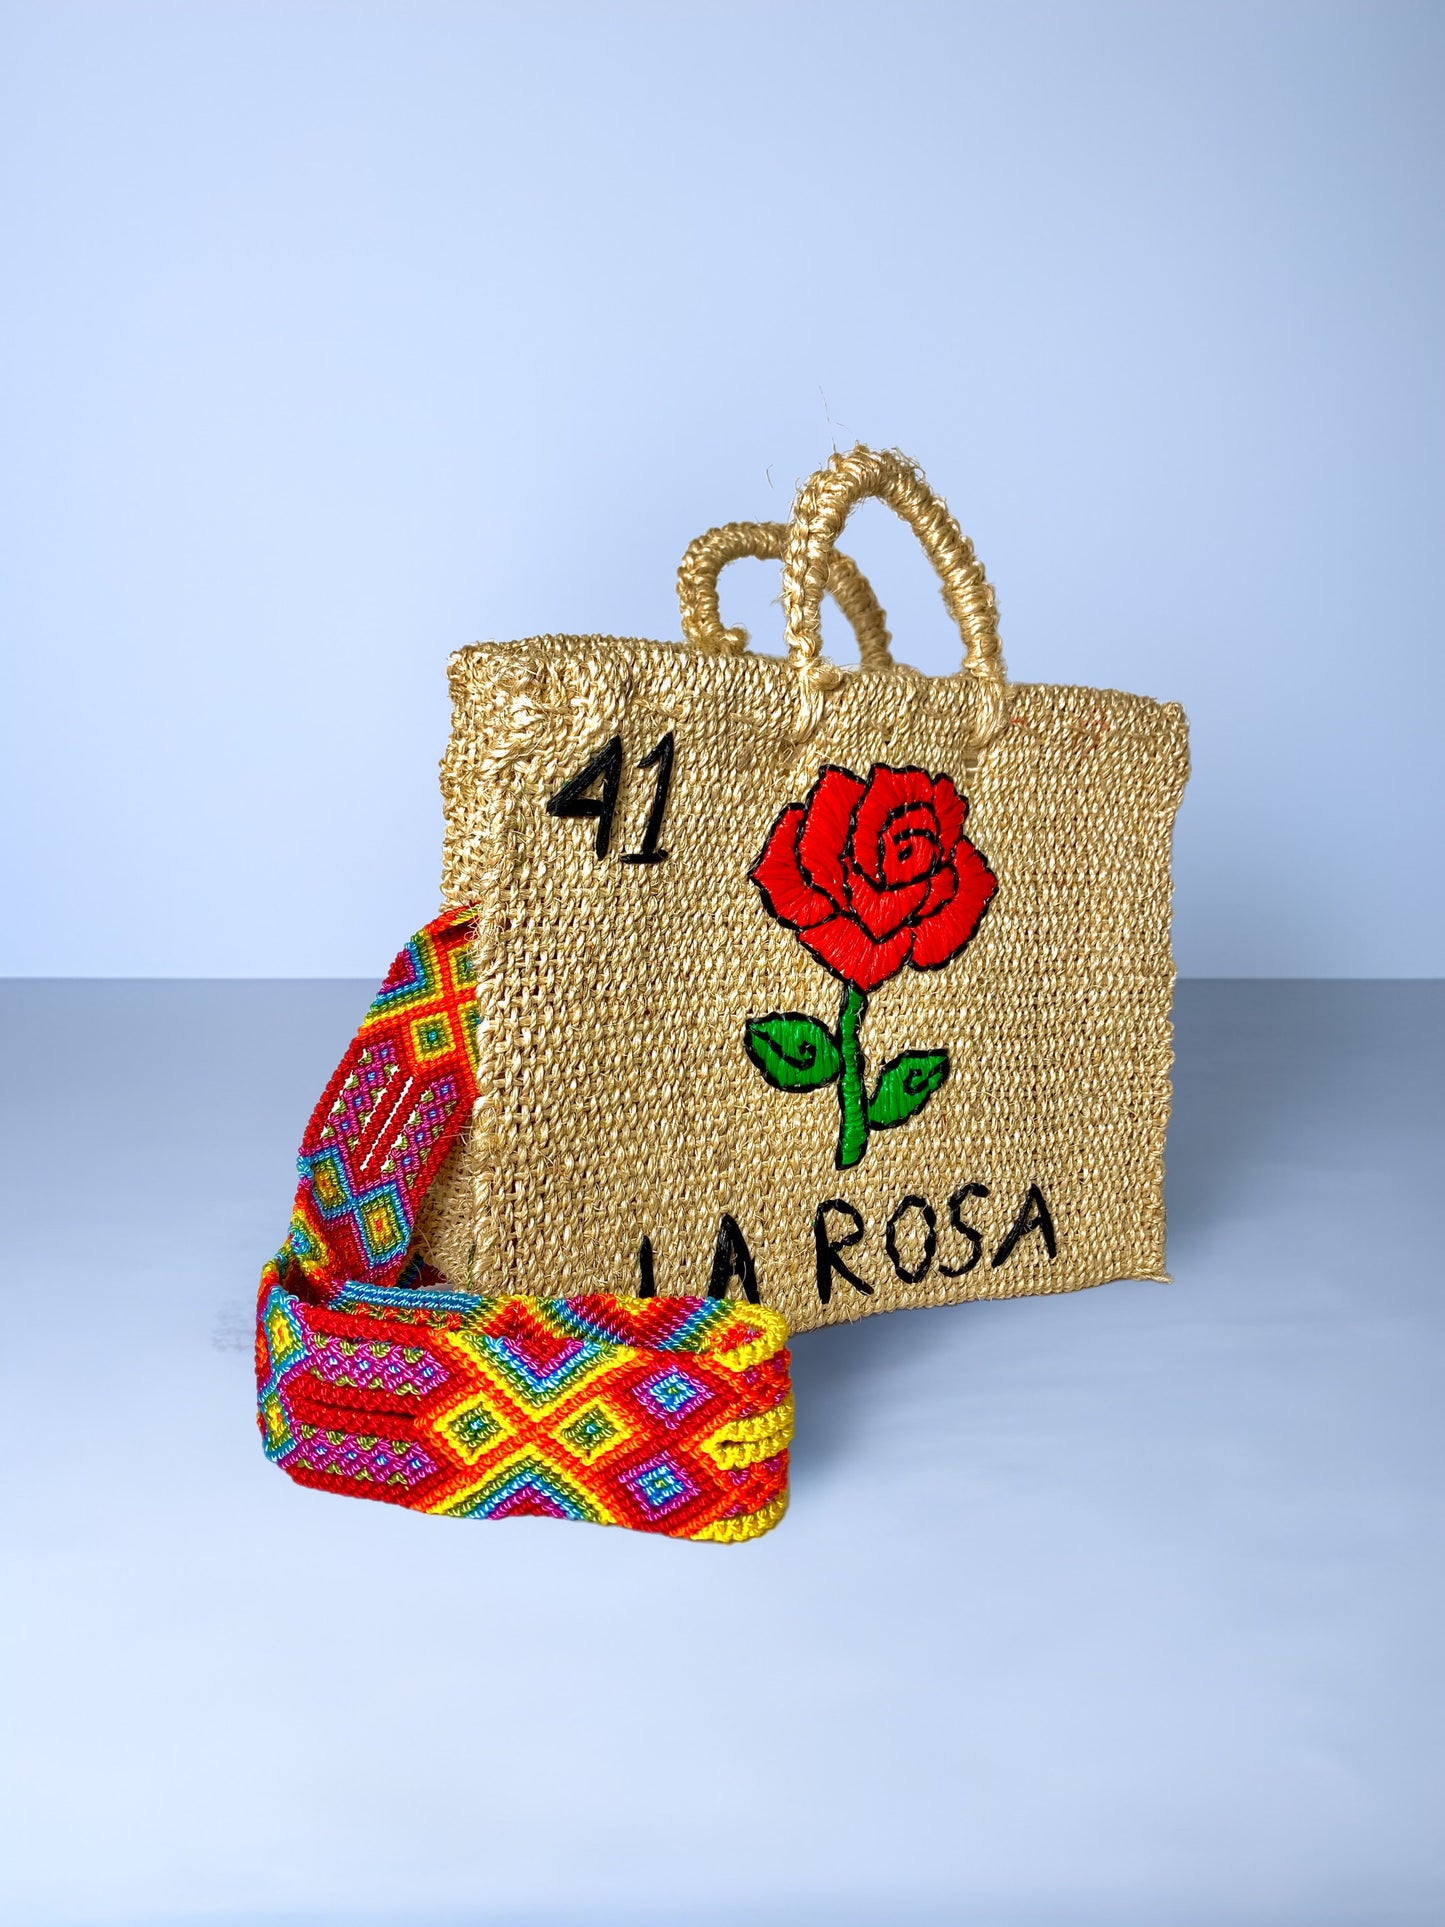 La Rosa lottery henequen bag